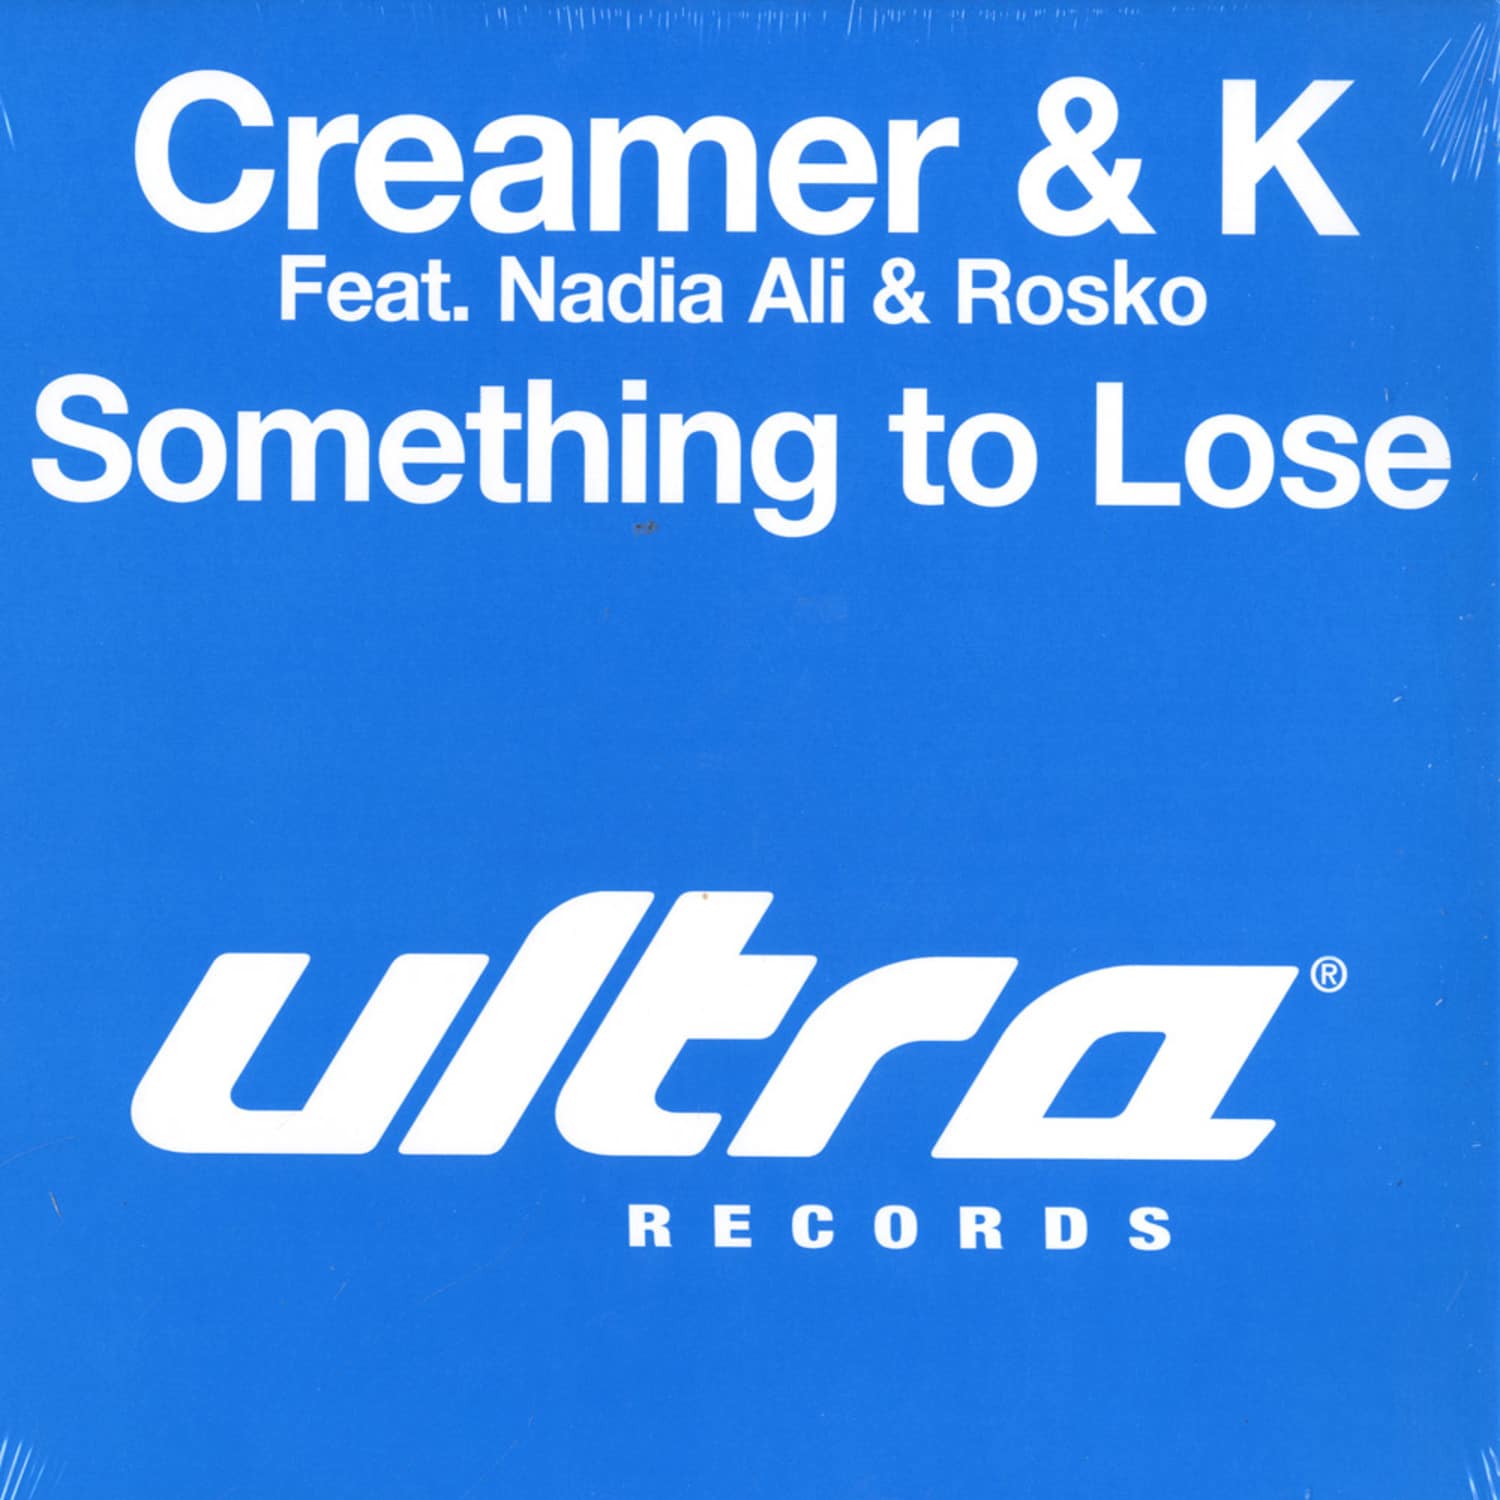 John Creamer and Stephane K Feat. Nadiad Ali & Rosko - SOMETHING TO LOSE